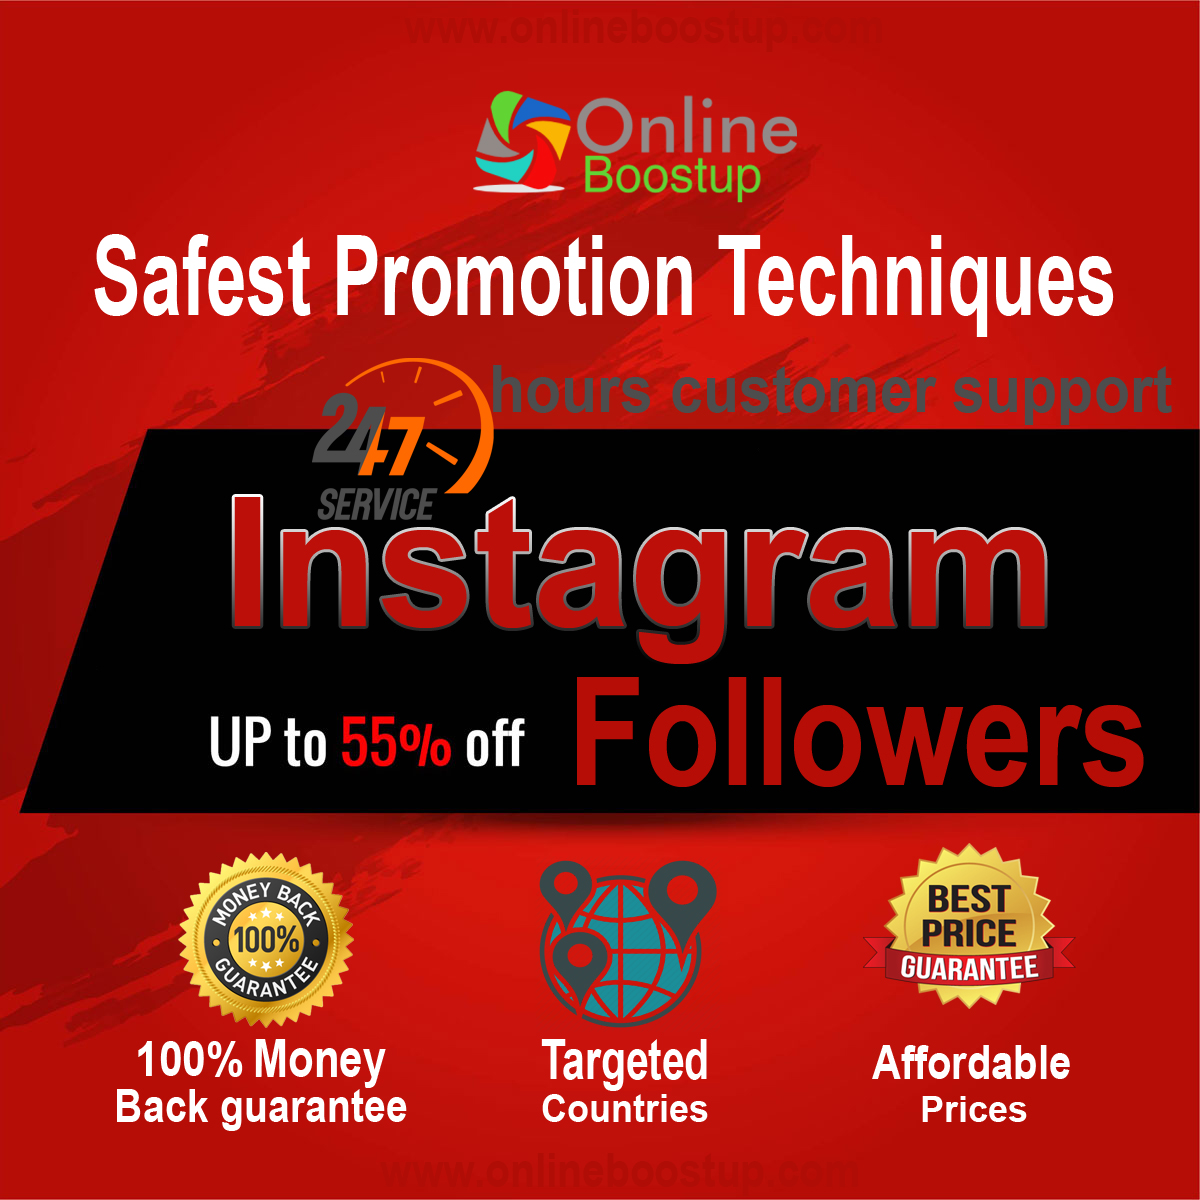 Buy Instagram Followers | Buy Instagram Followers Cheap ... - 1200 x 1200 jpeg 581kB